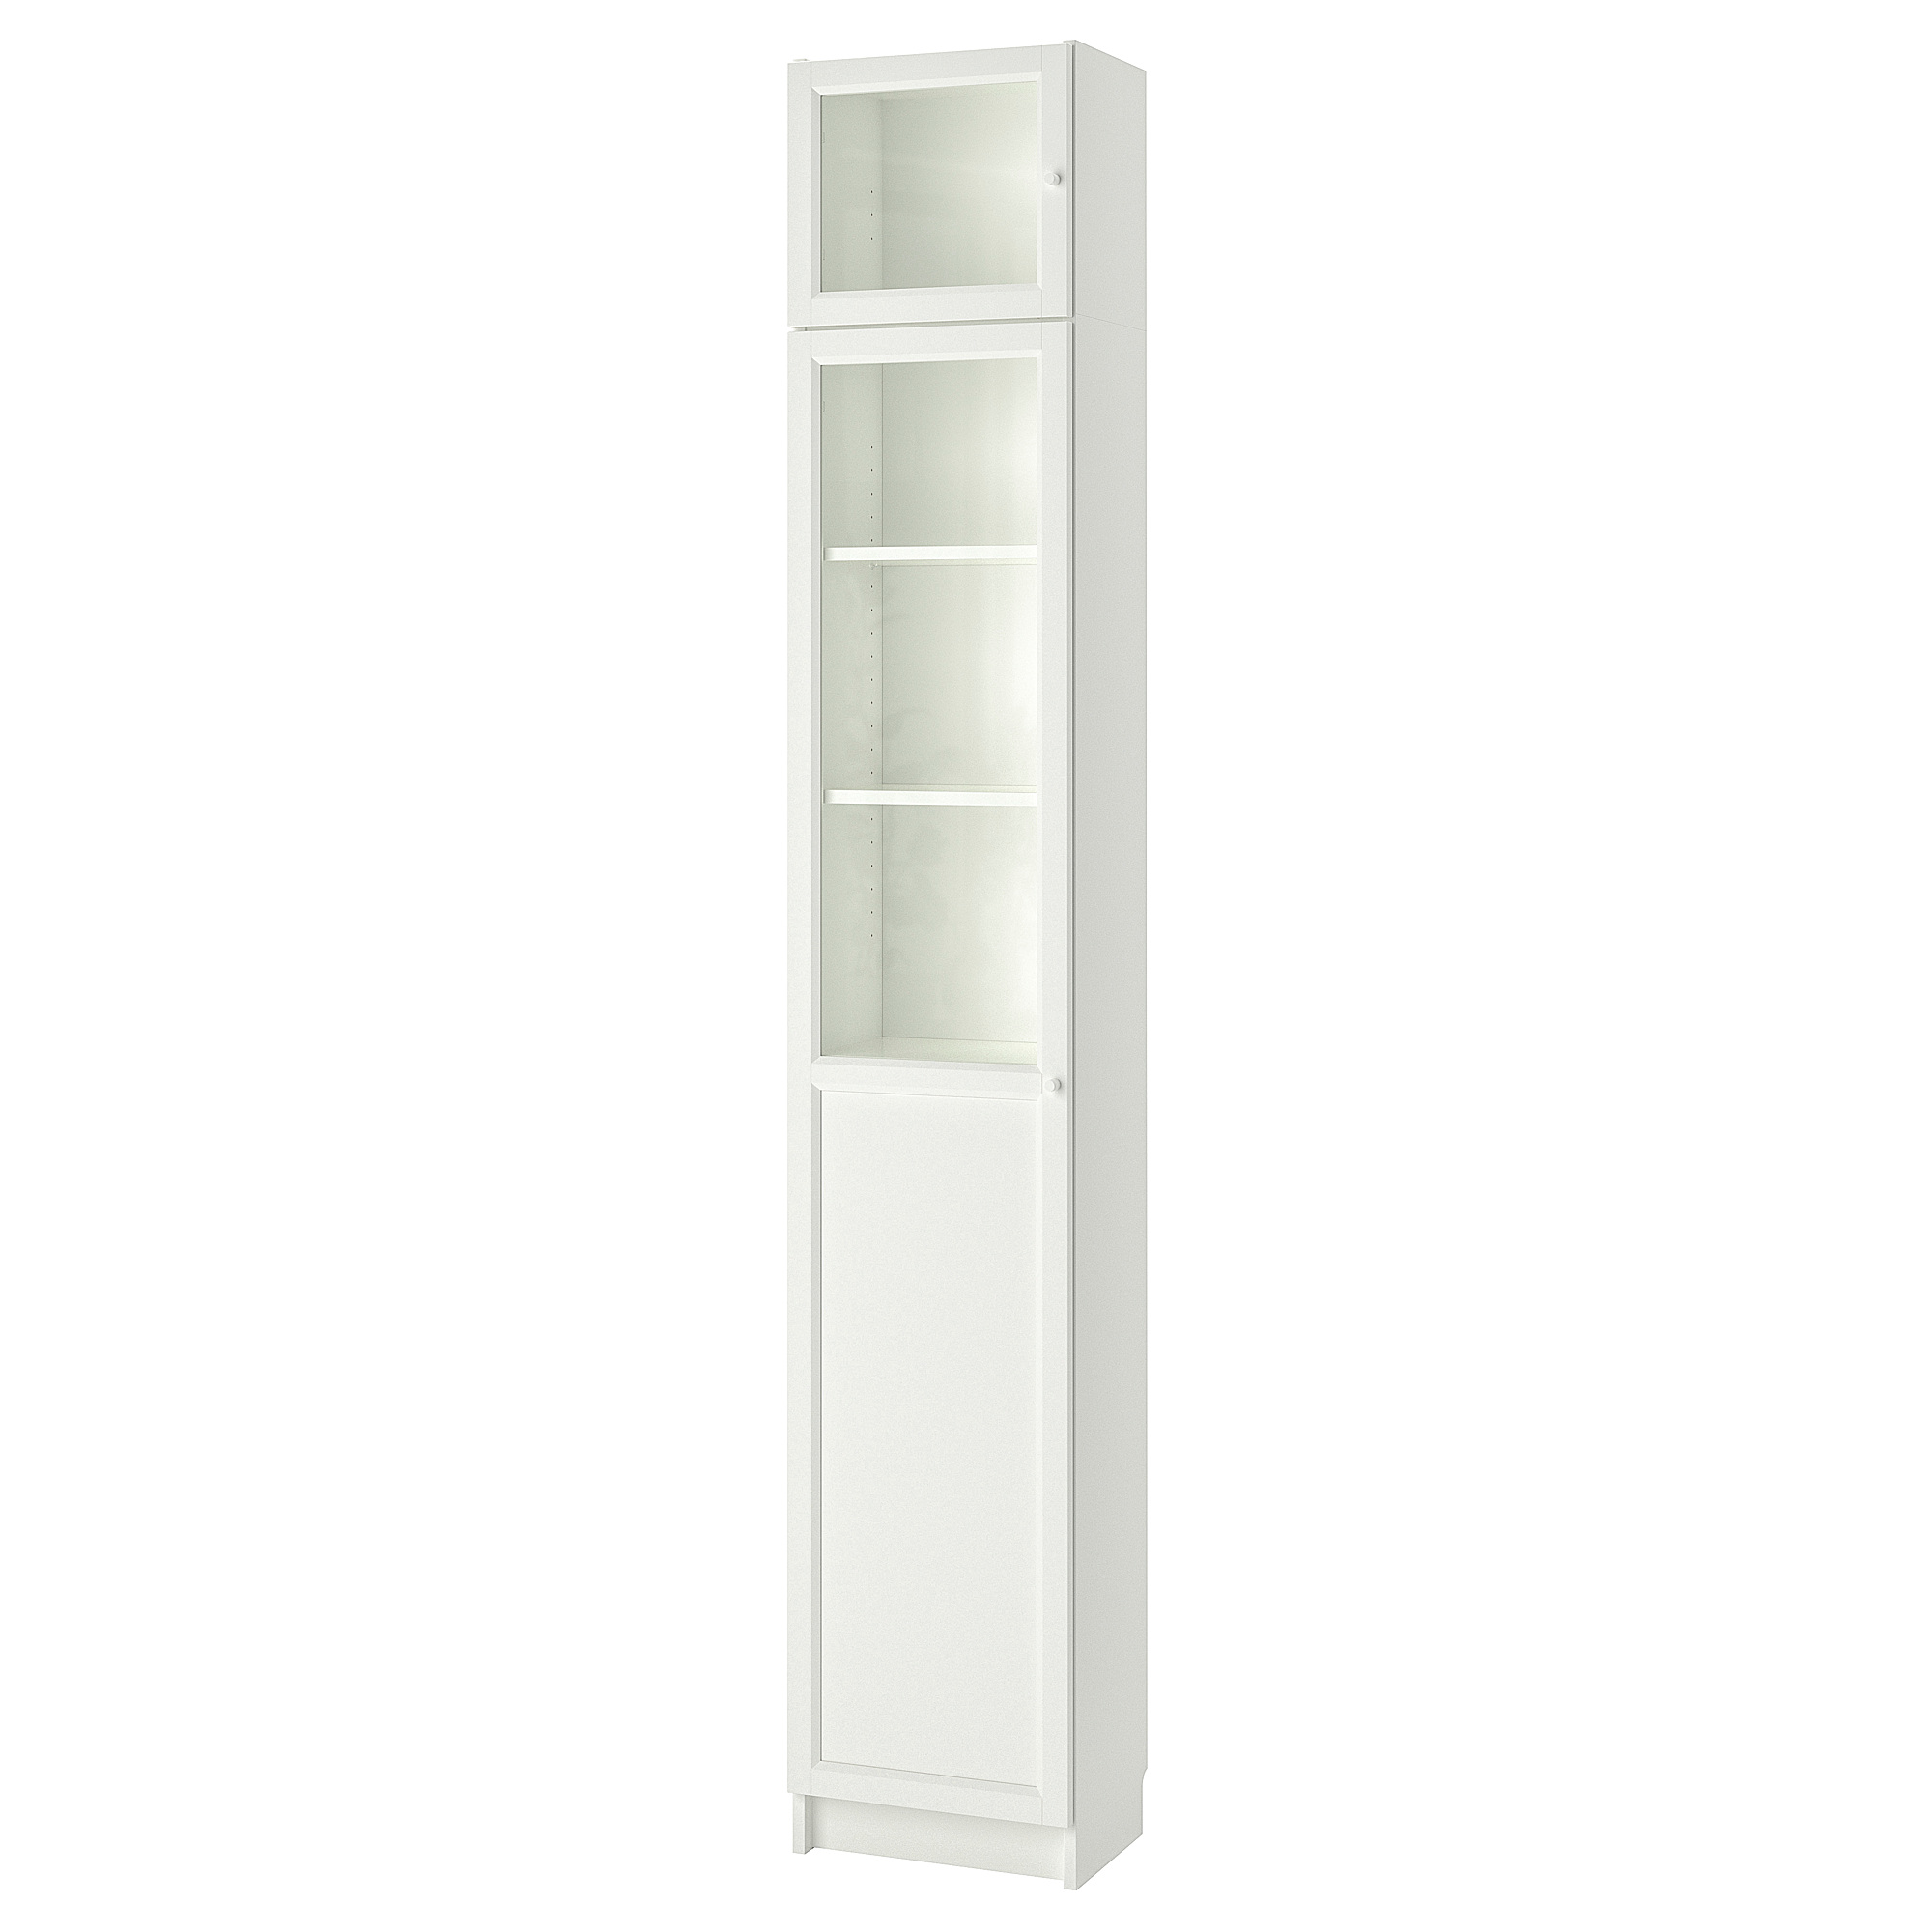 BILLY/OXBERG - 書櫃組合, 白色/玻璃, 40x30x237 厘米| IKEA 香港及澳門